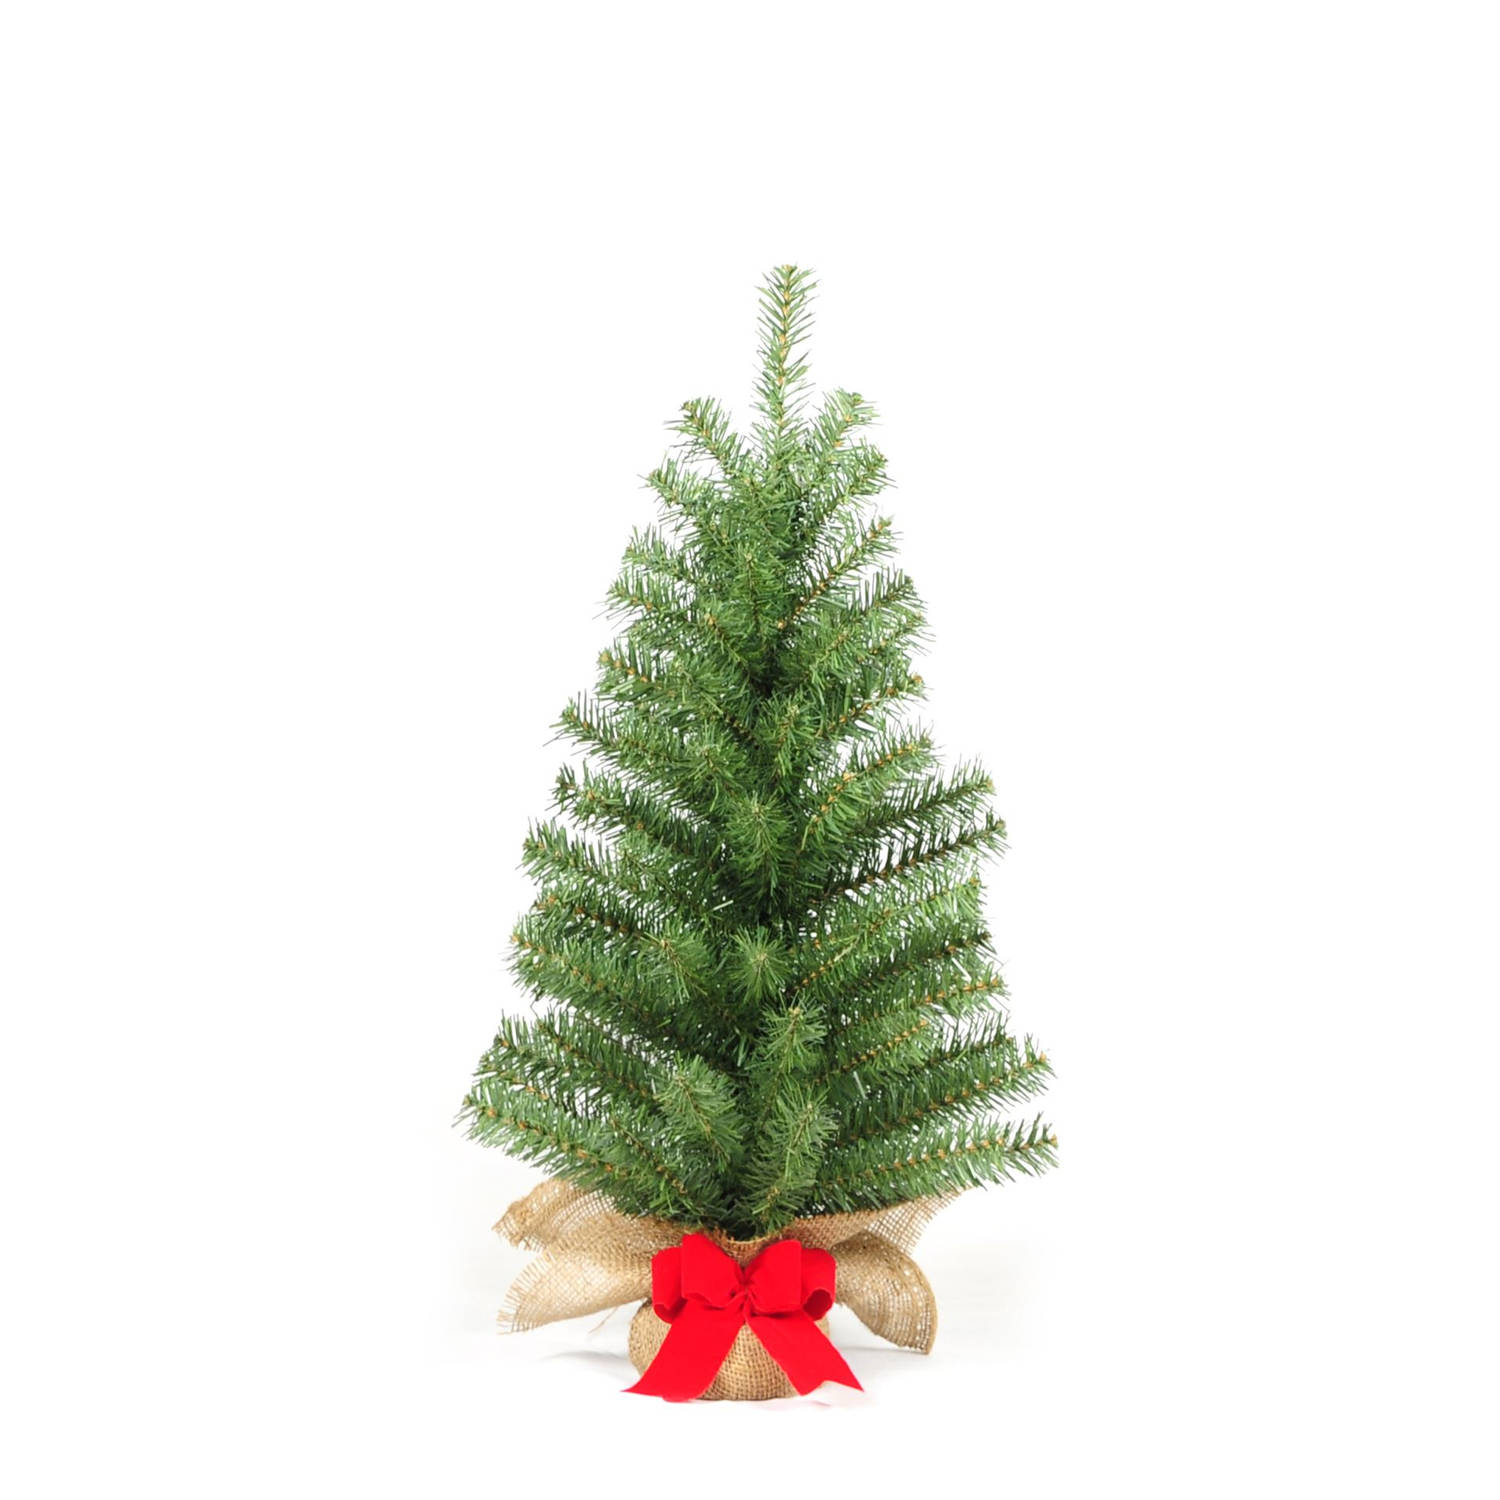 Forest Table Tree kunst (tafel)kerstboom - 60 cm - groen - Ø 35 cm - 82 tips - met rode strik - jute zak